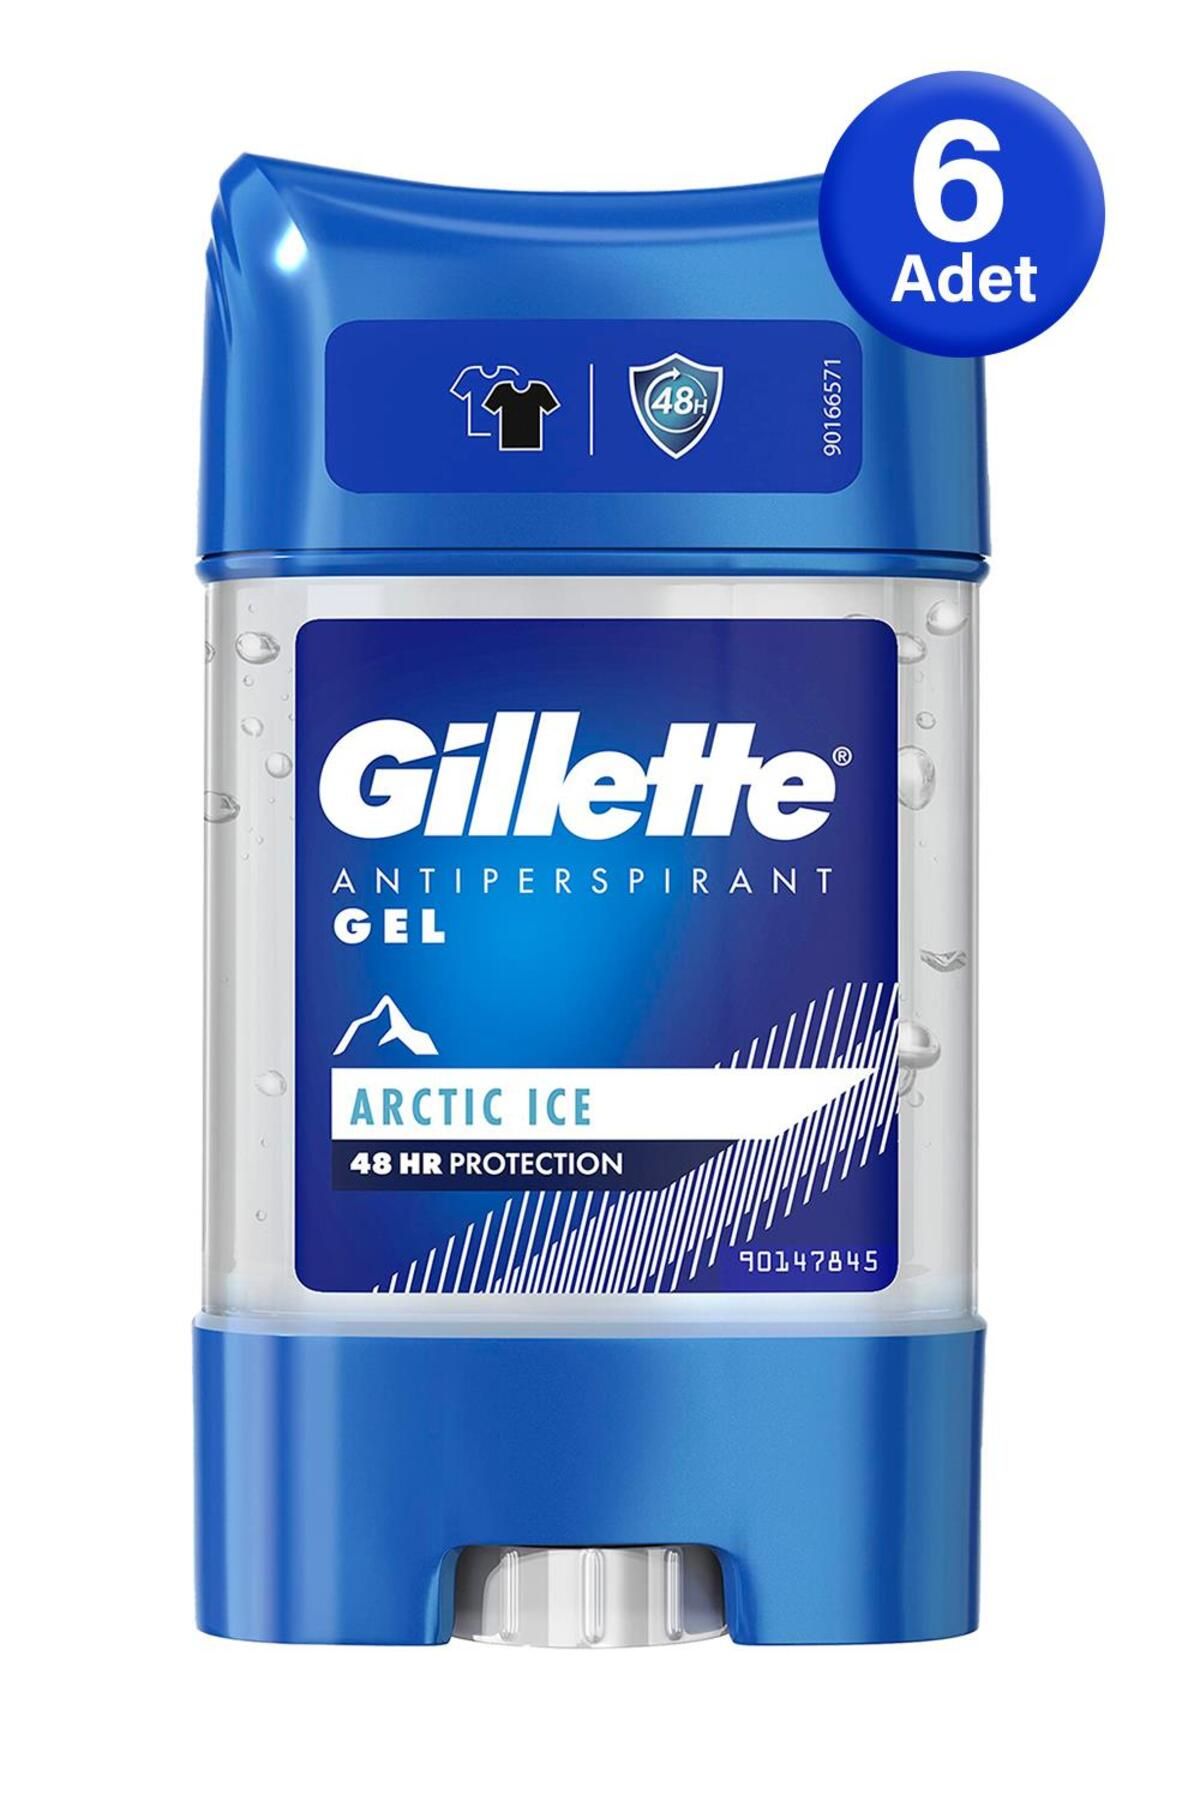 Gillette Antiperspirant Gel Arctic Ice 70 ml - 6 Adet